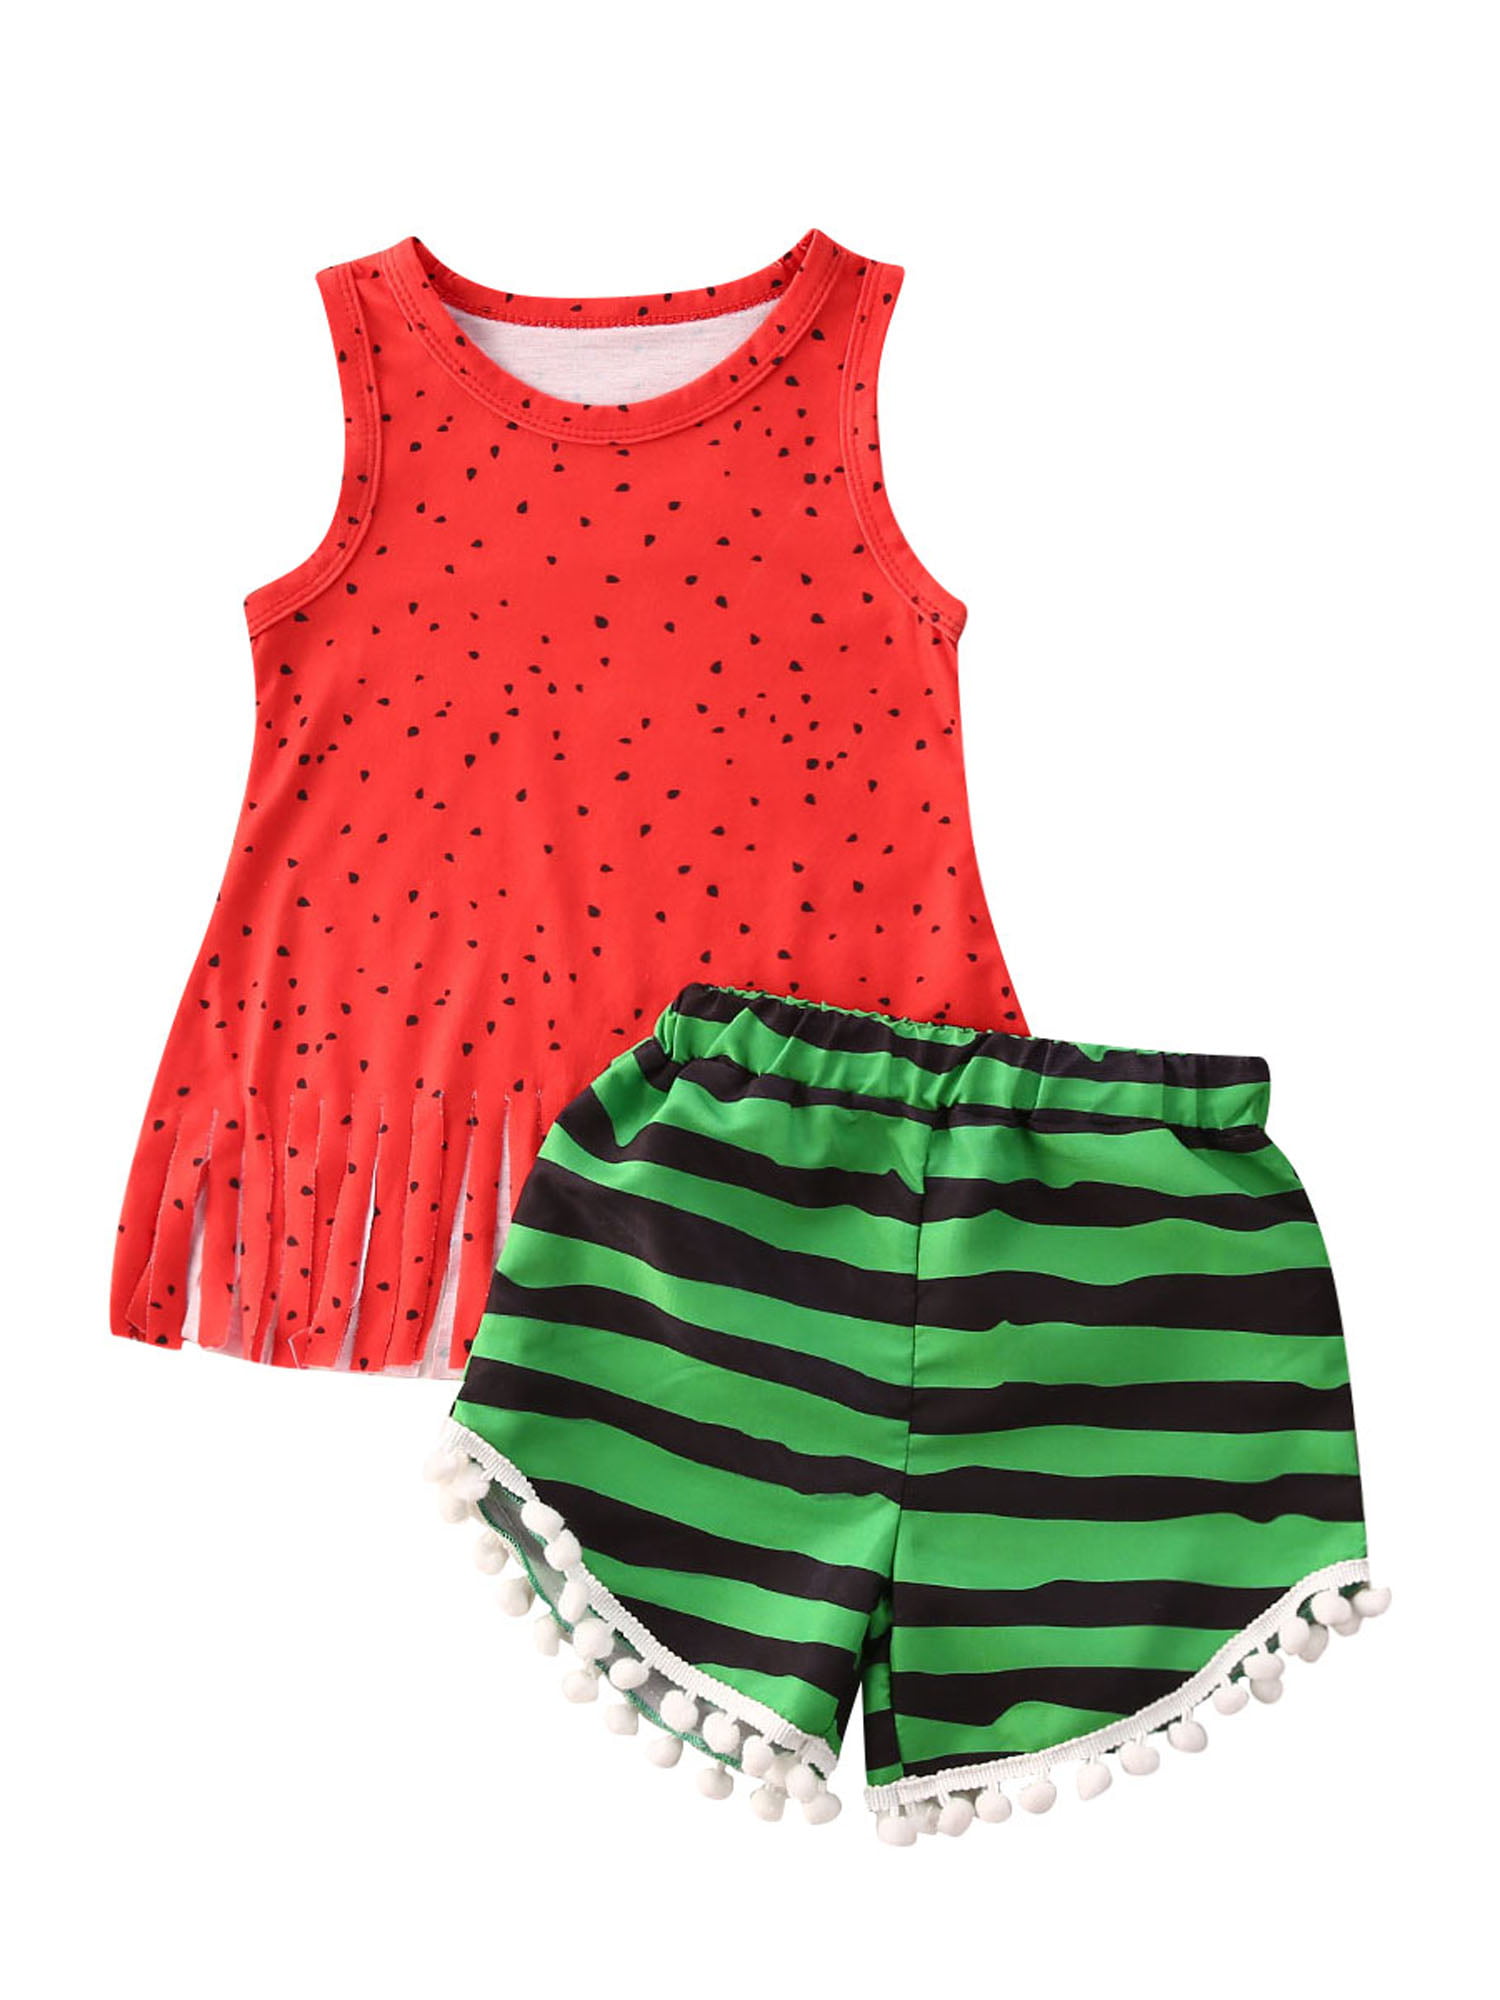 Baby Girls Watermelon Vest Shorts Sleepsuit Set Kids Summer Sleeveless Pajamas Clothes